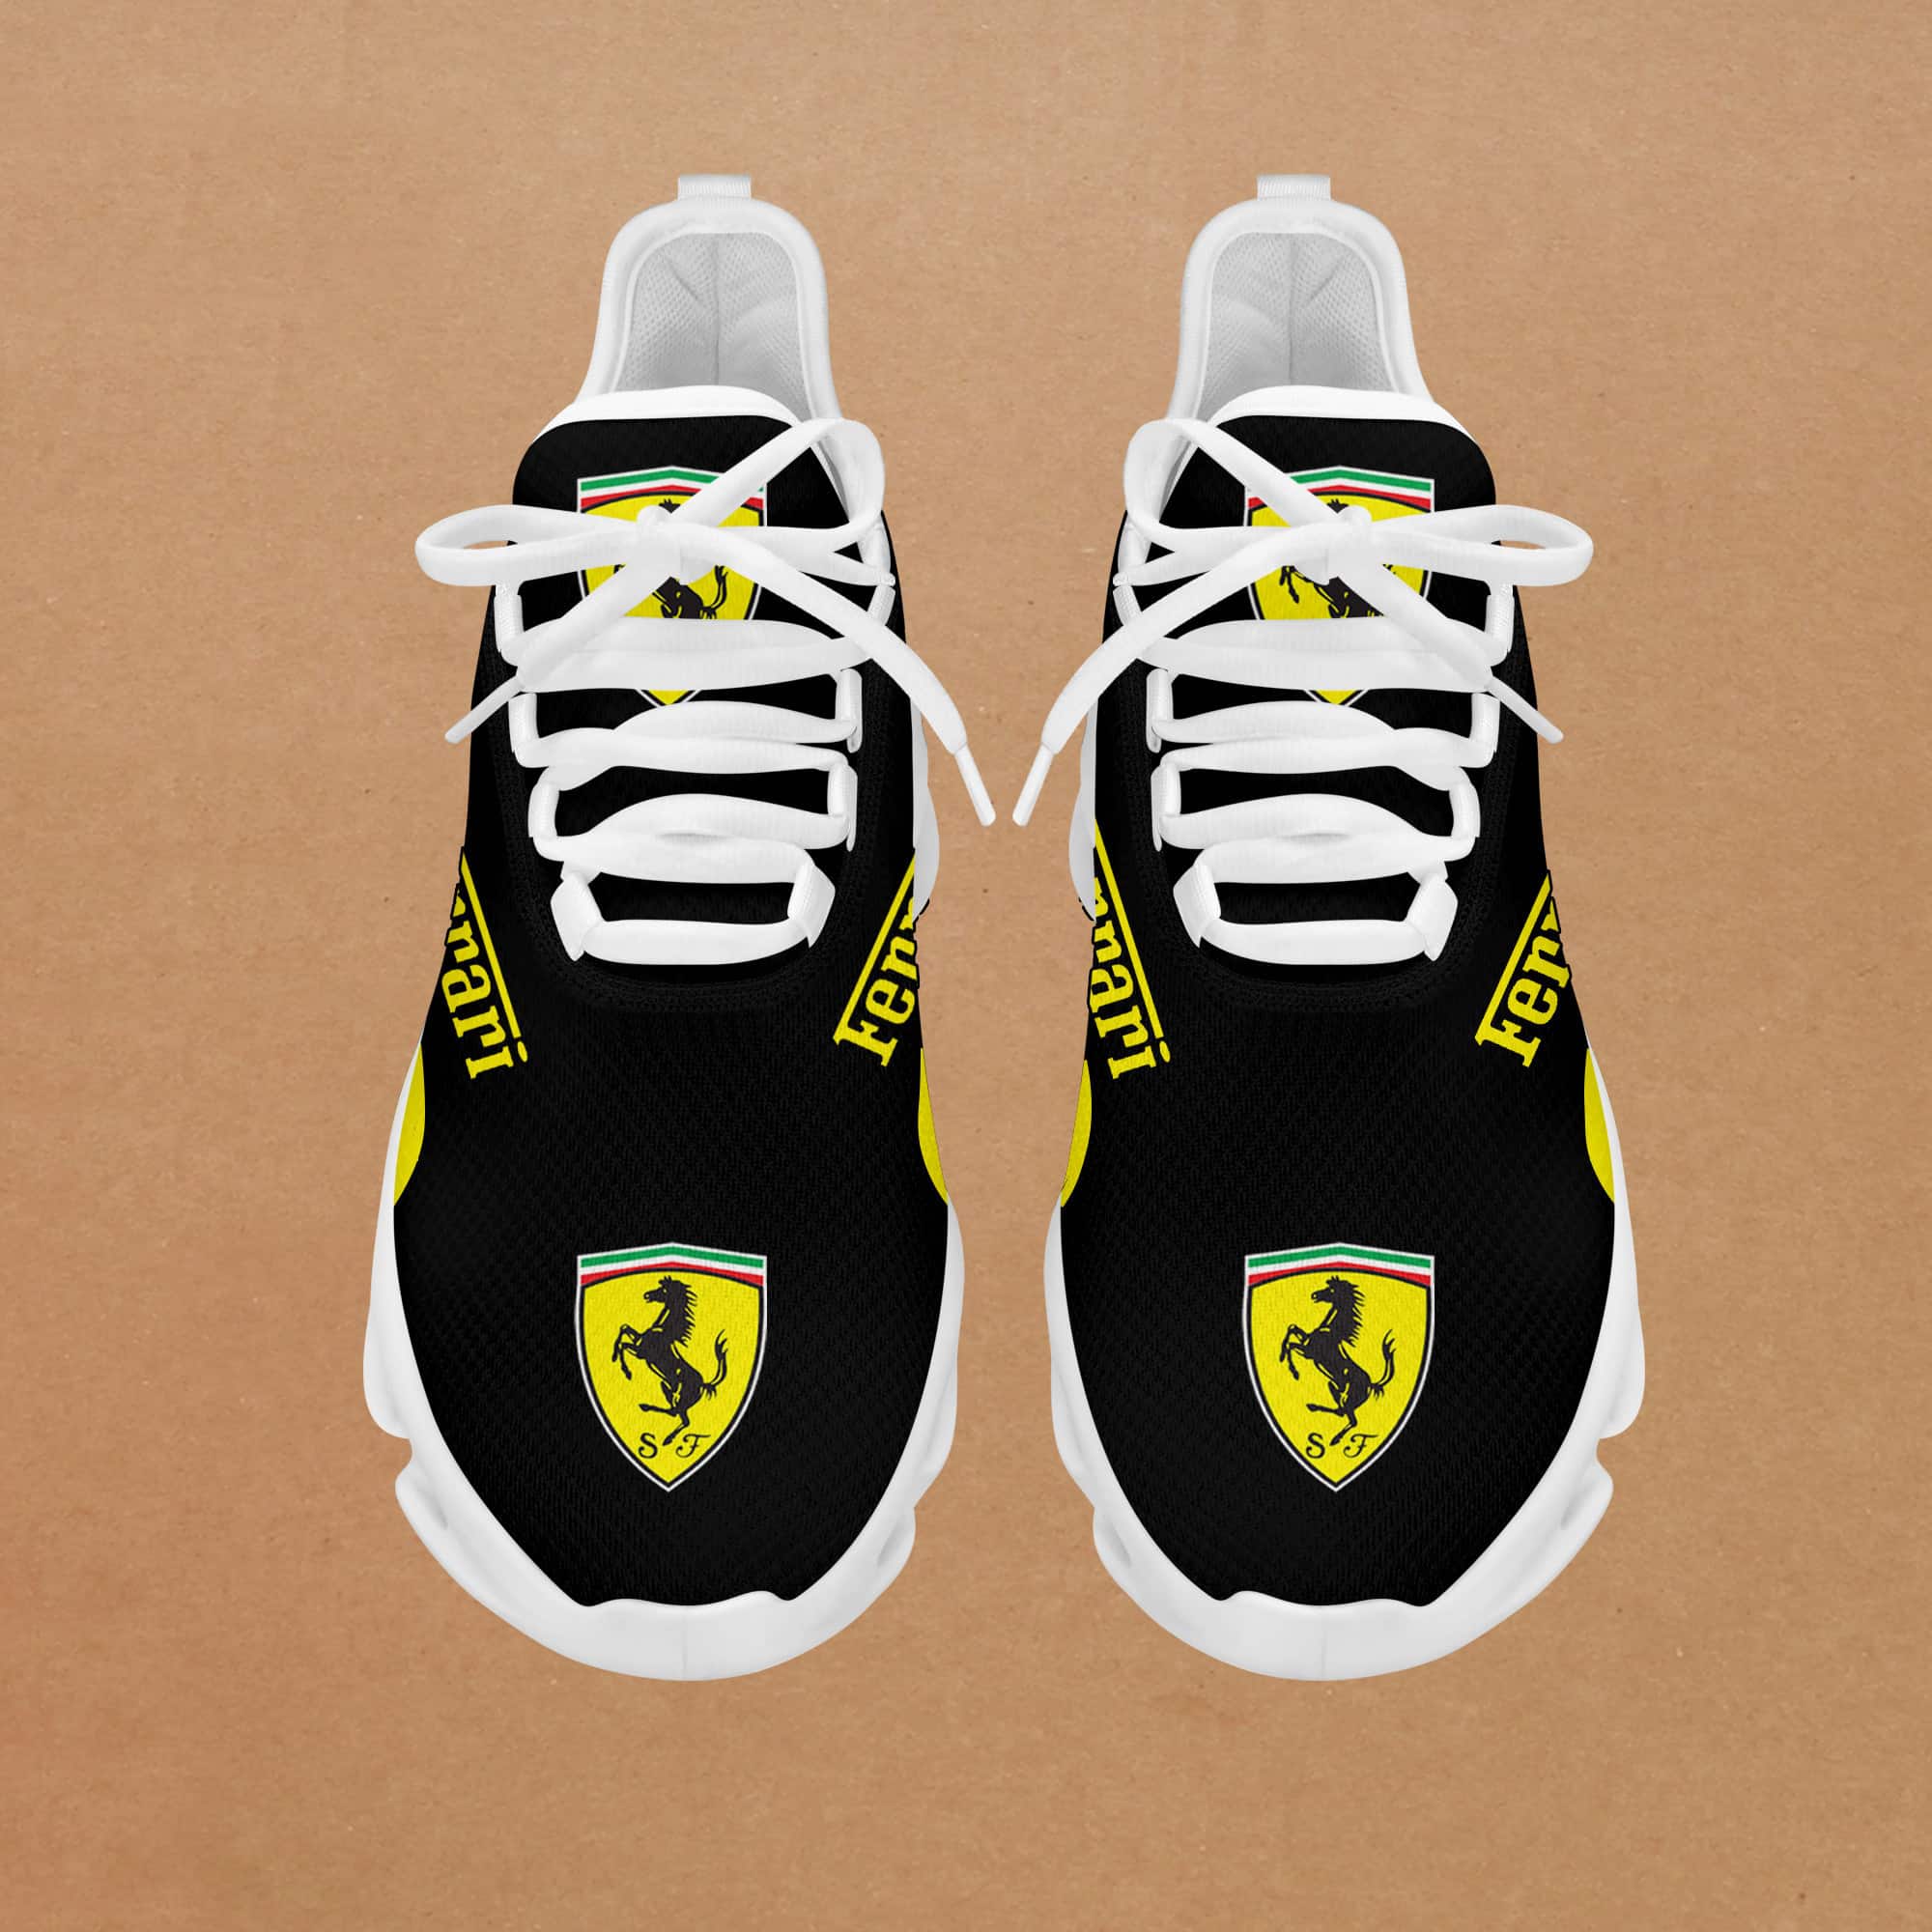 Ferrari Sneaker Running Shoes Max Soul Shoes Sneakers Ver 6 3